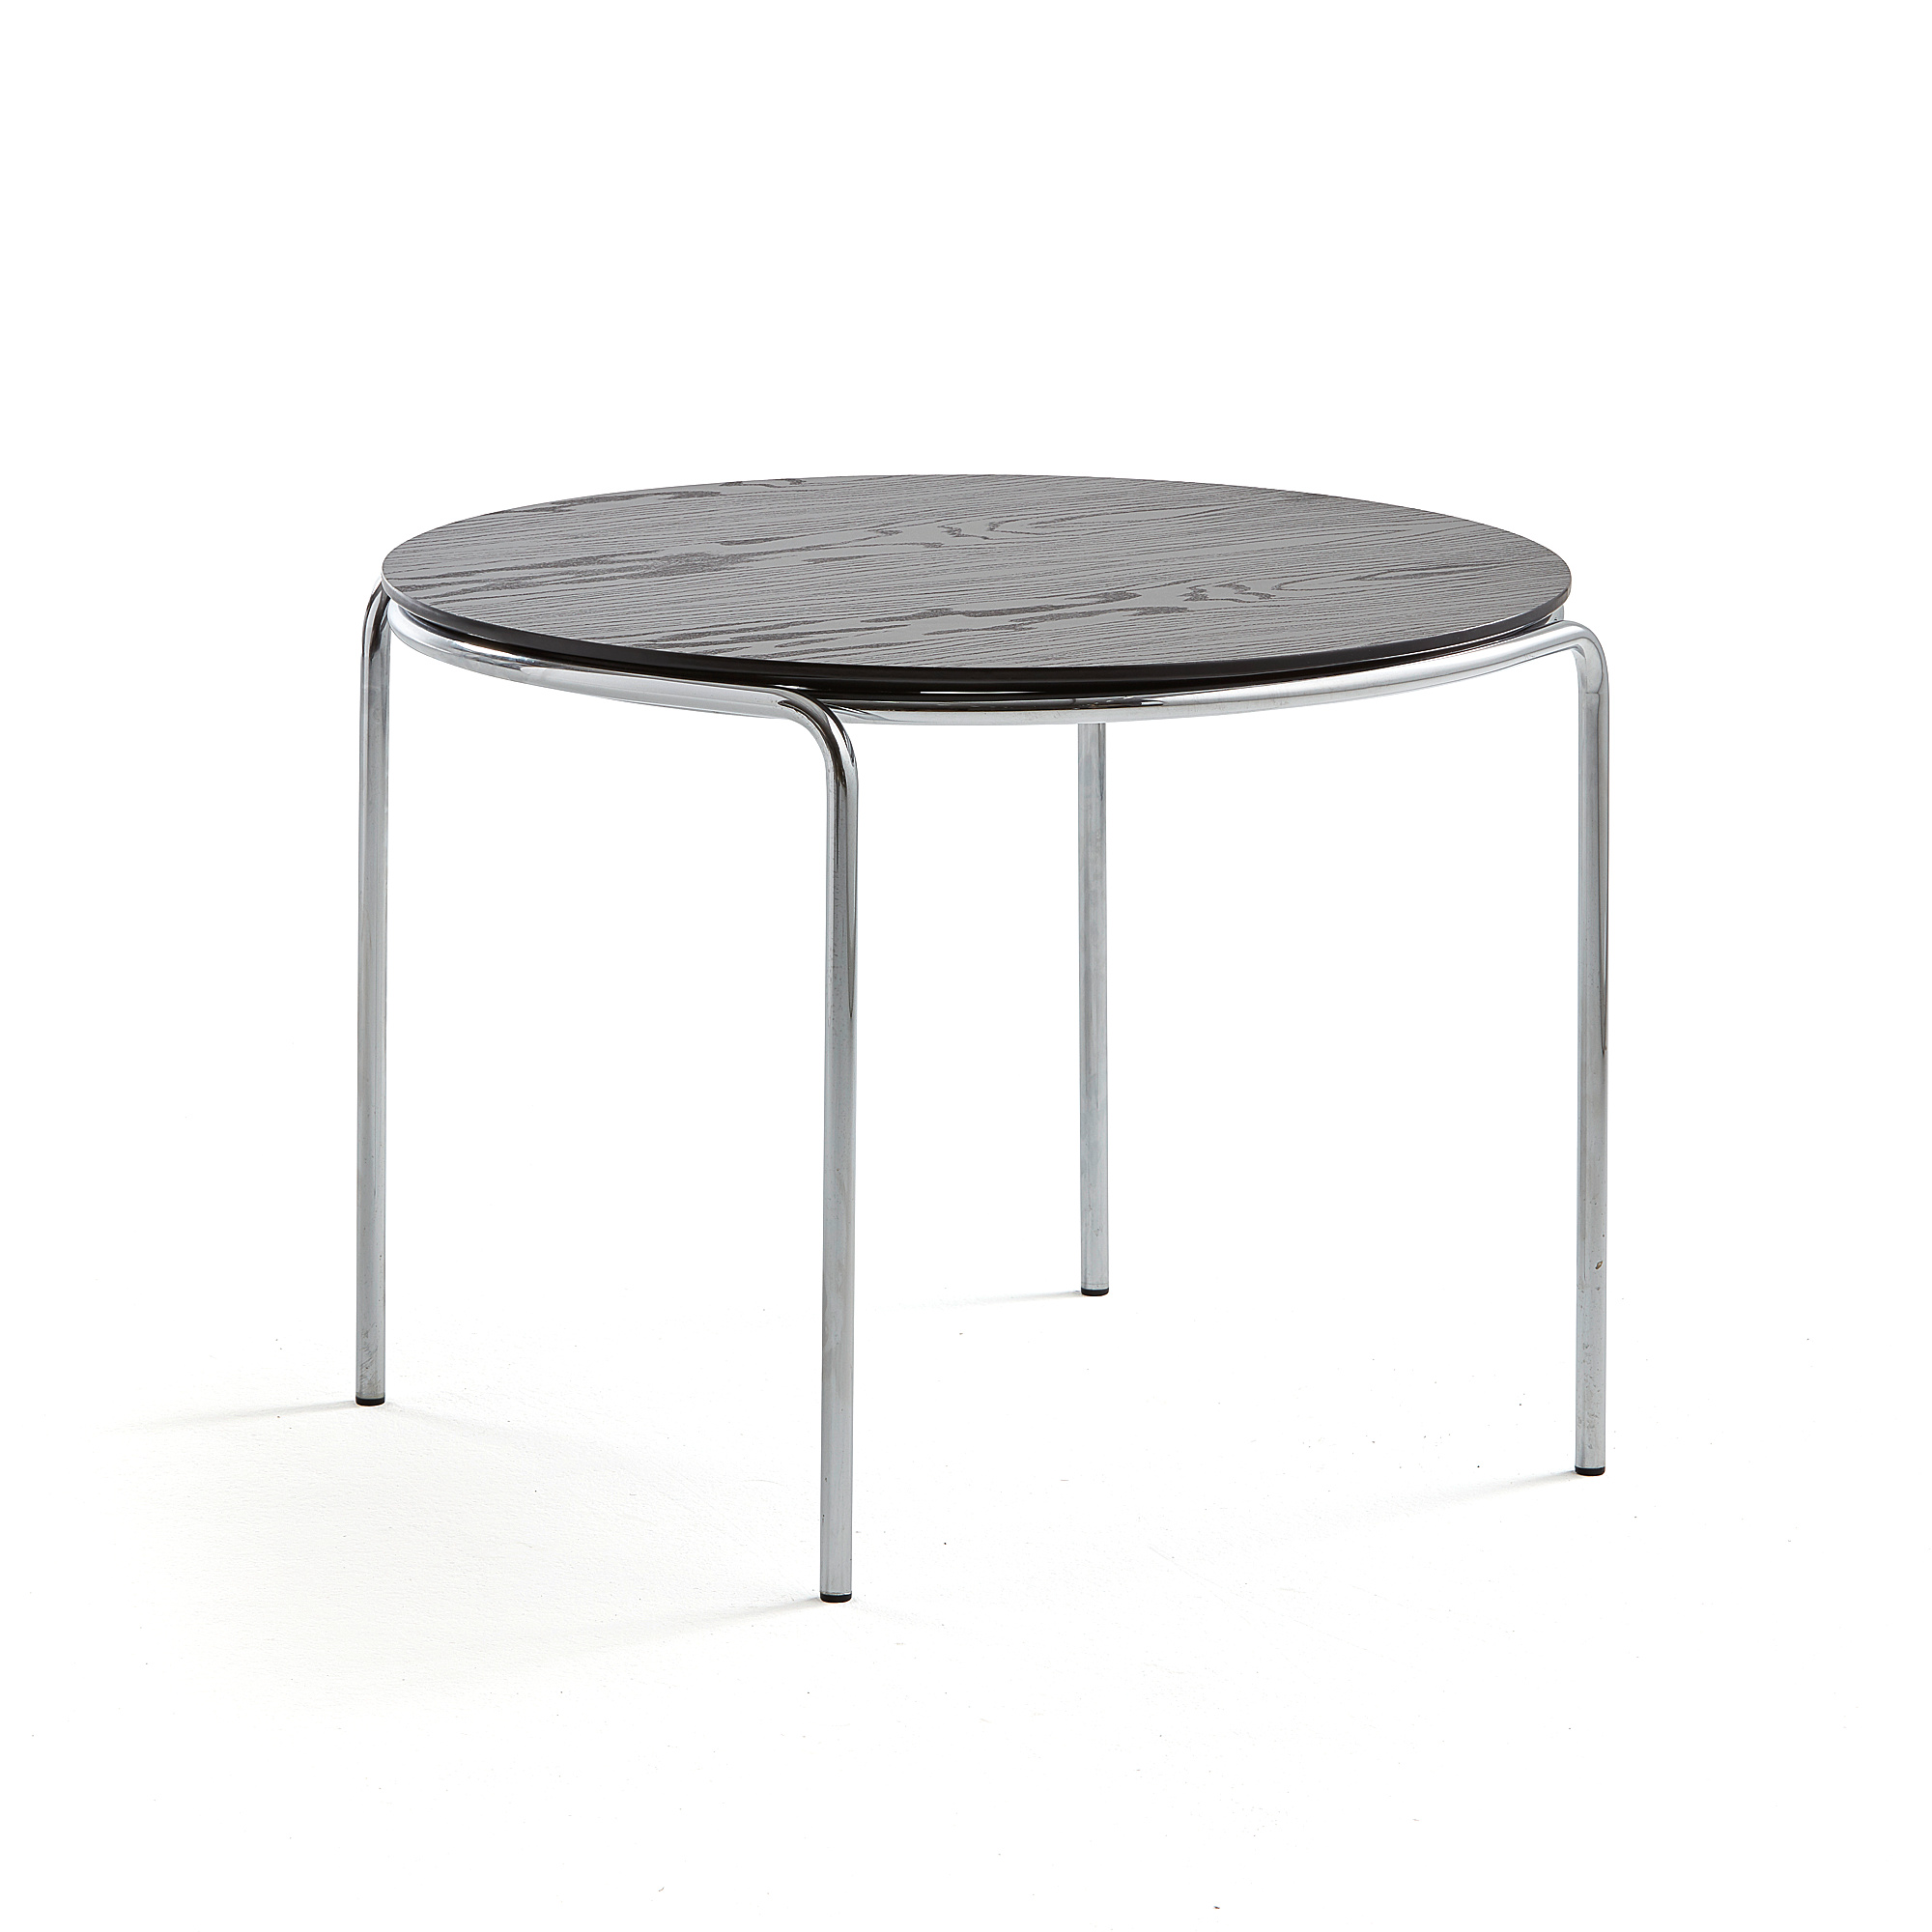 Konferenčný stolík ASHLEY, Ø770 x 530 mm, chróm, čierna